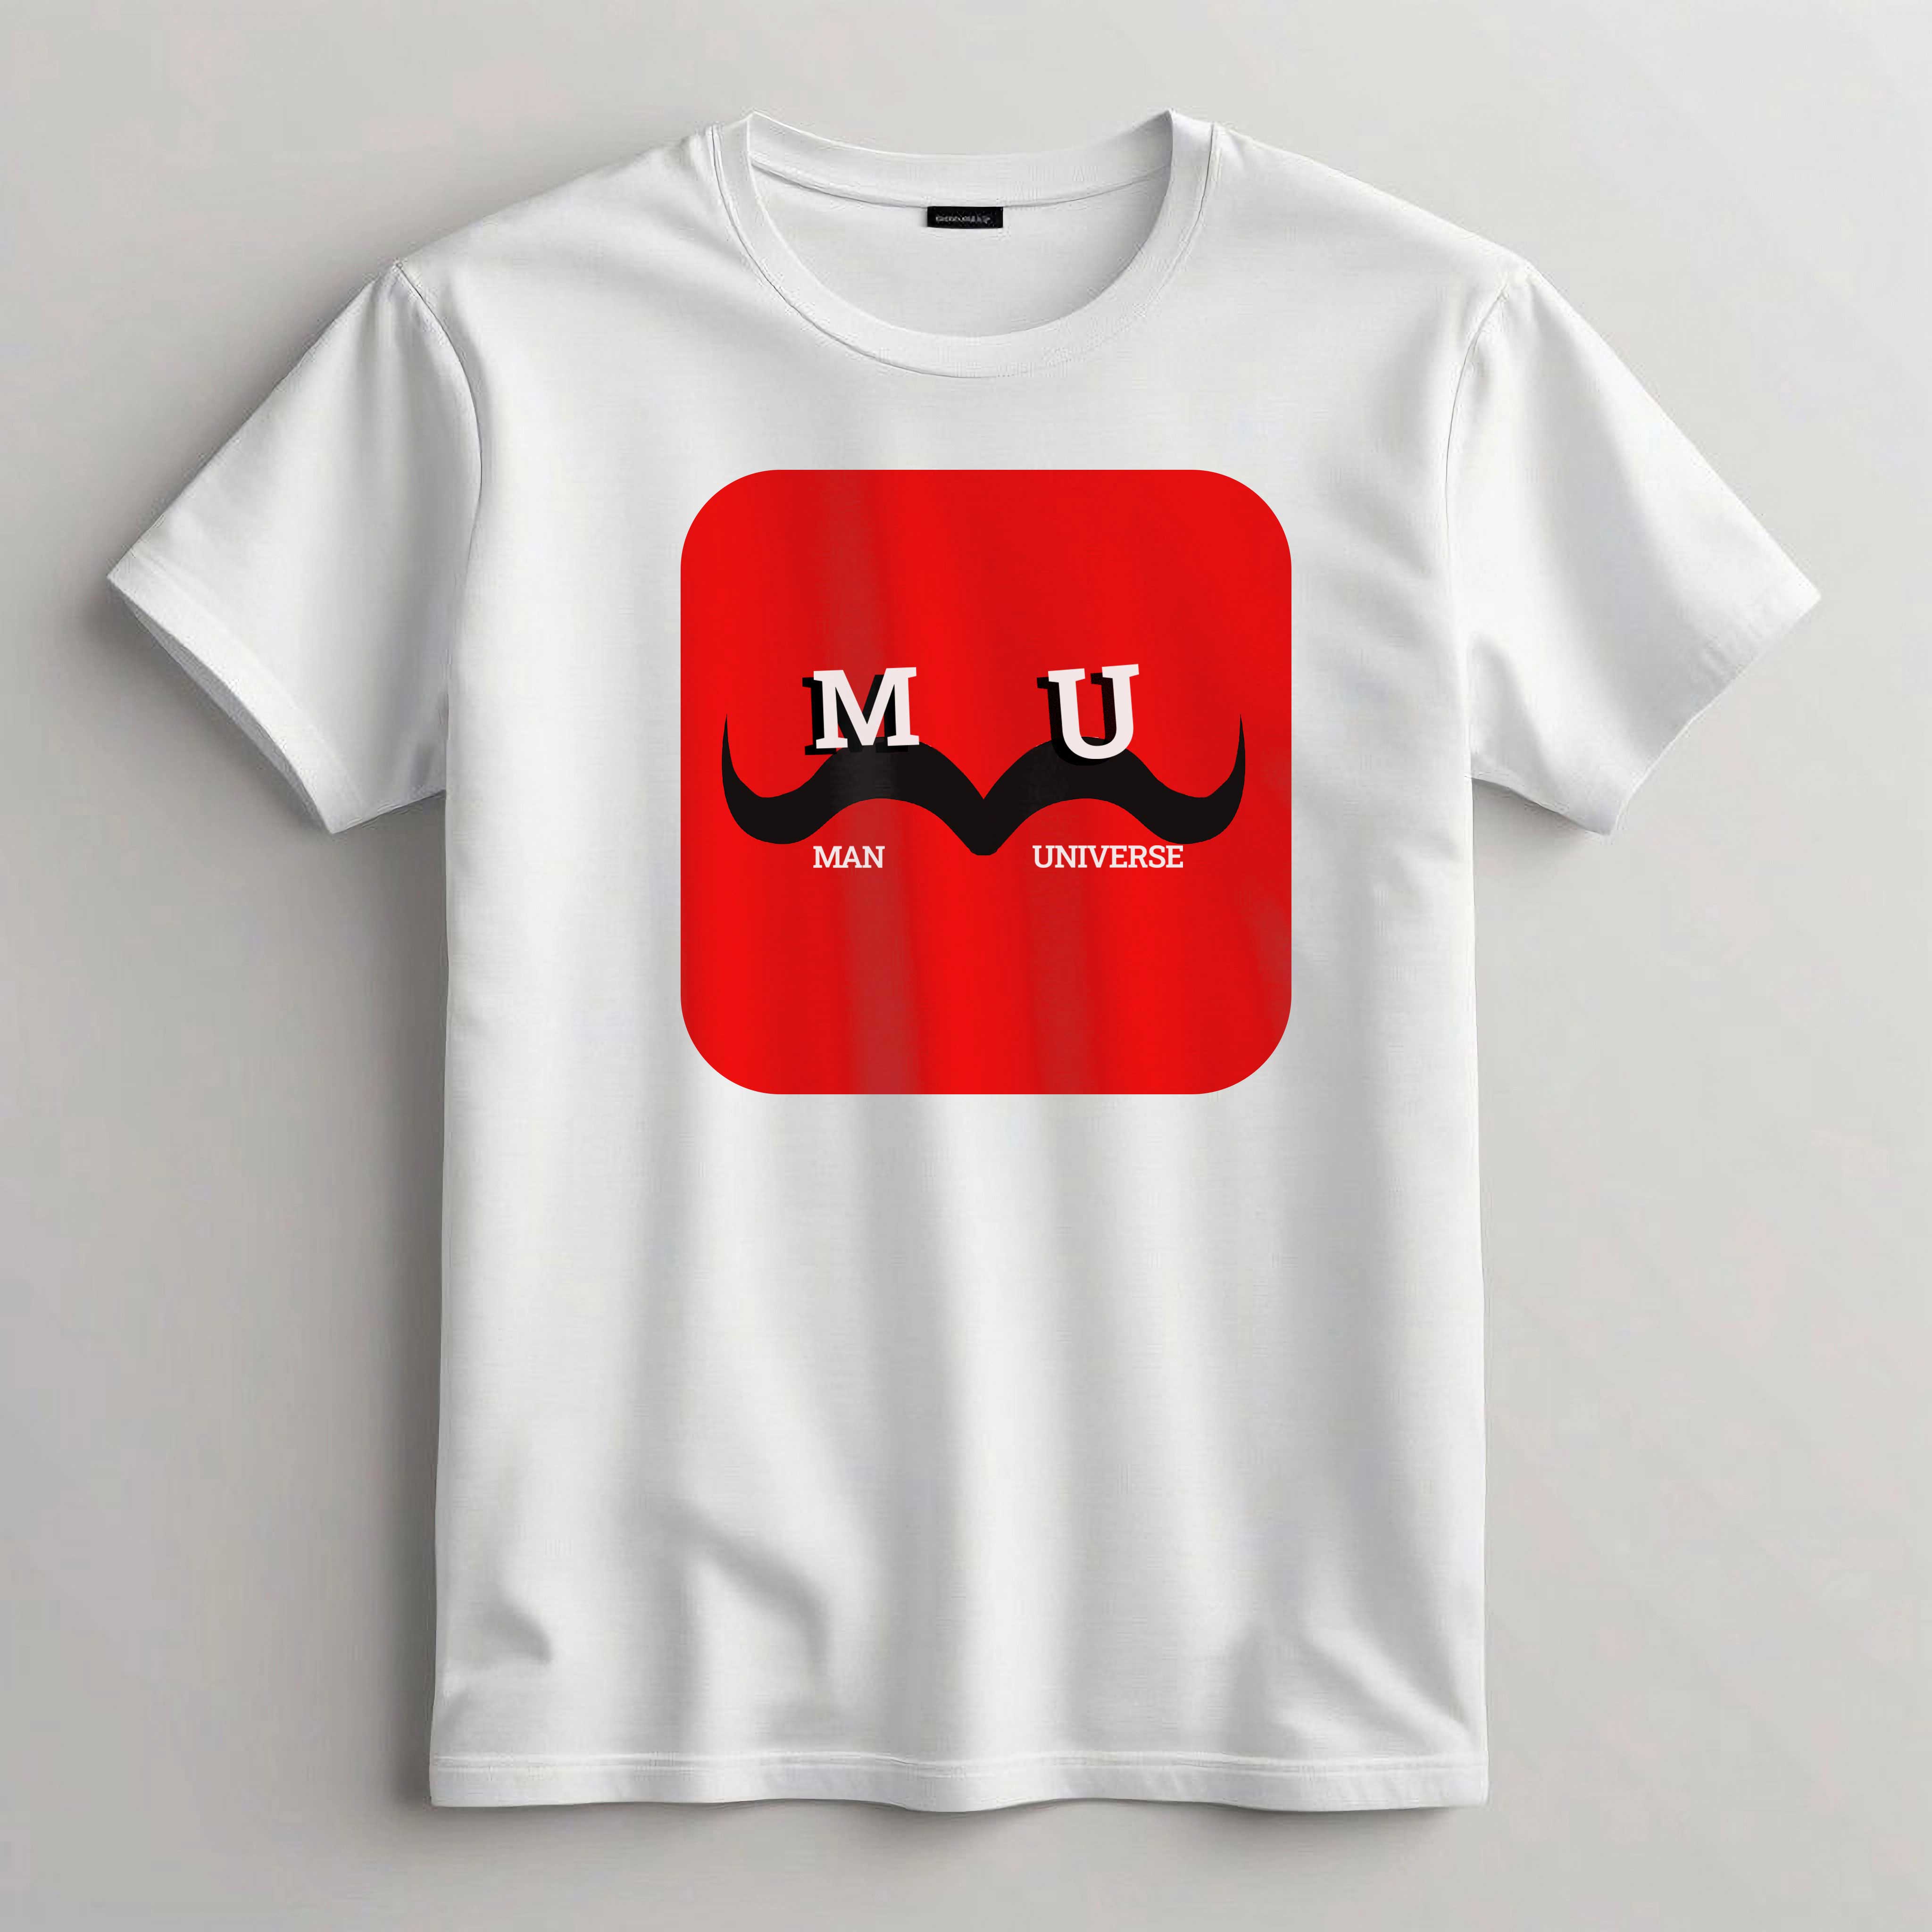 man universe t-shirt design template cover image.